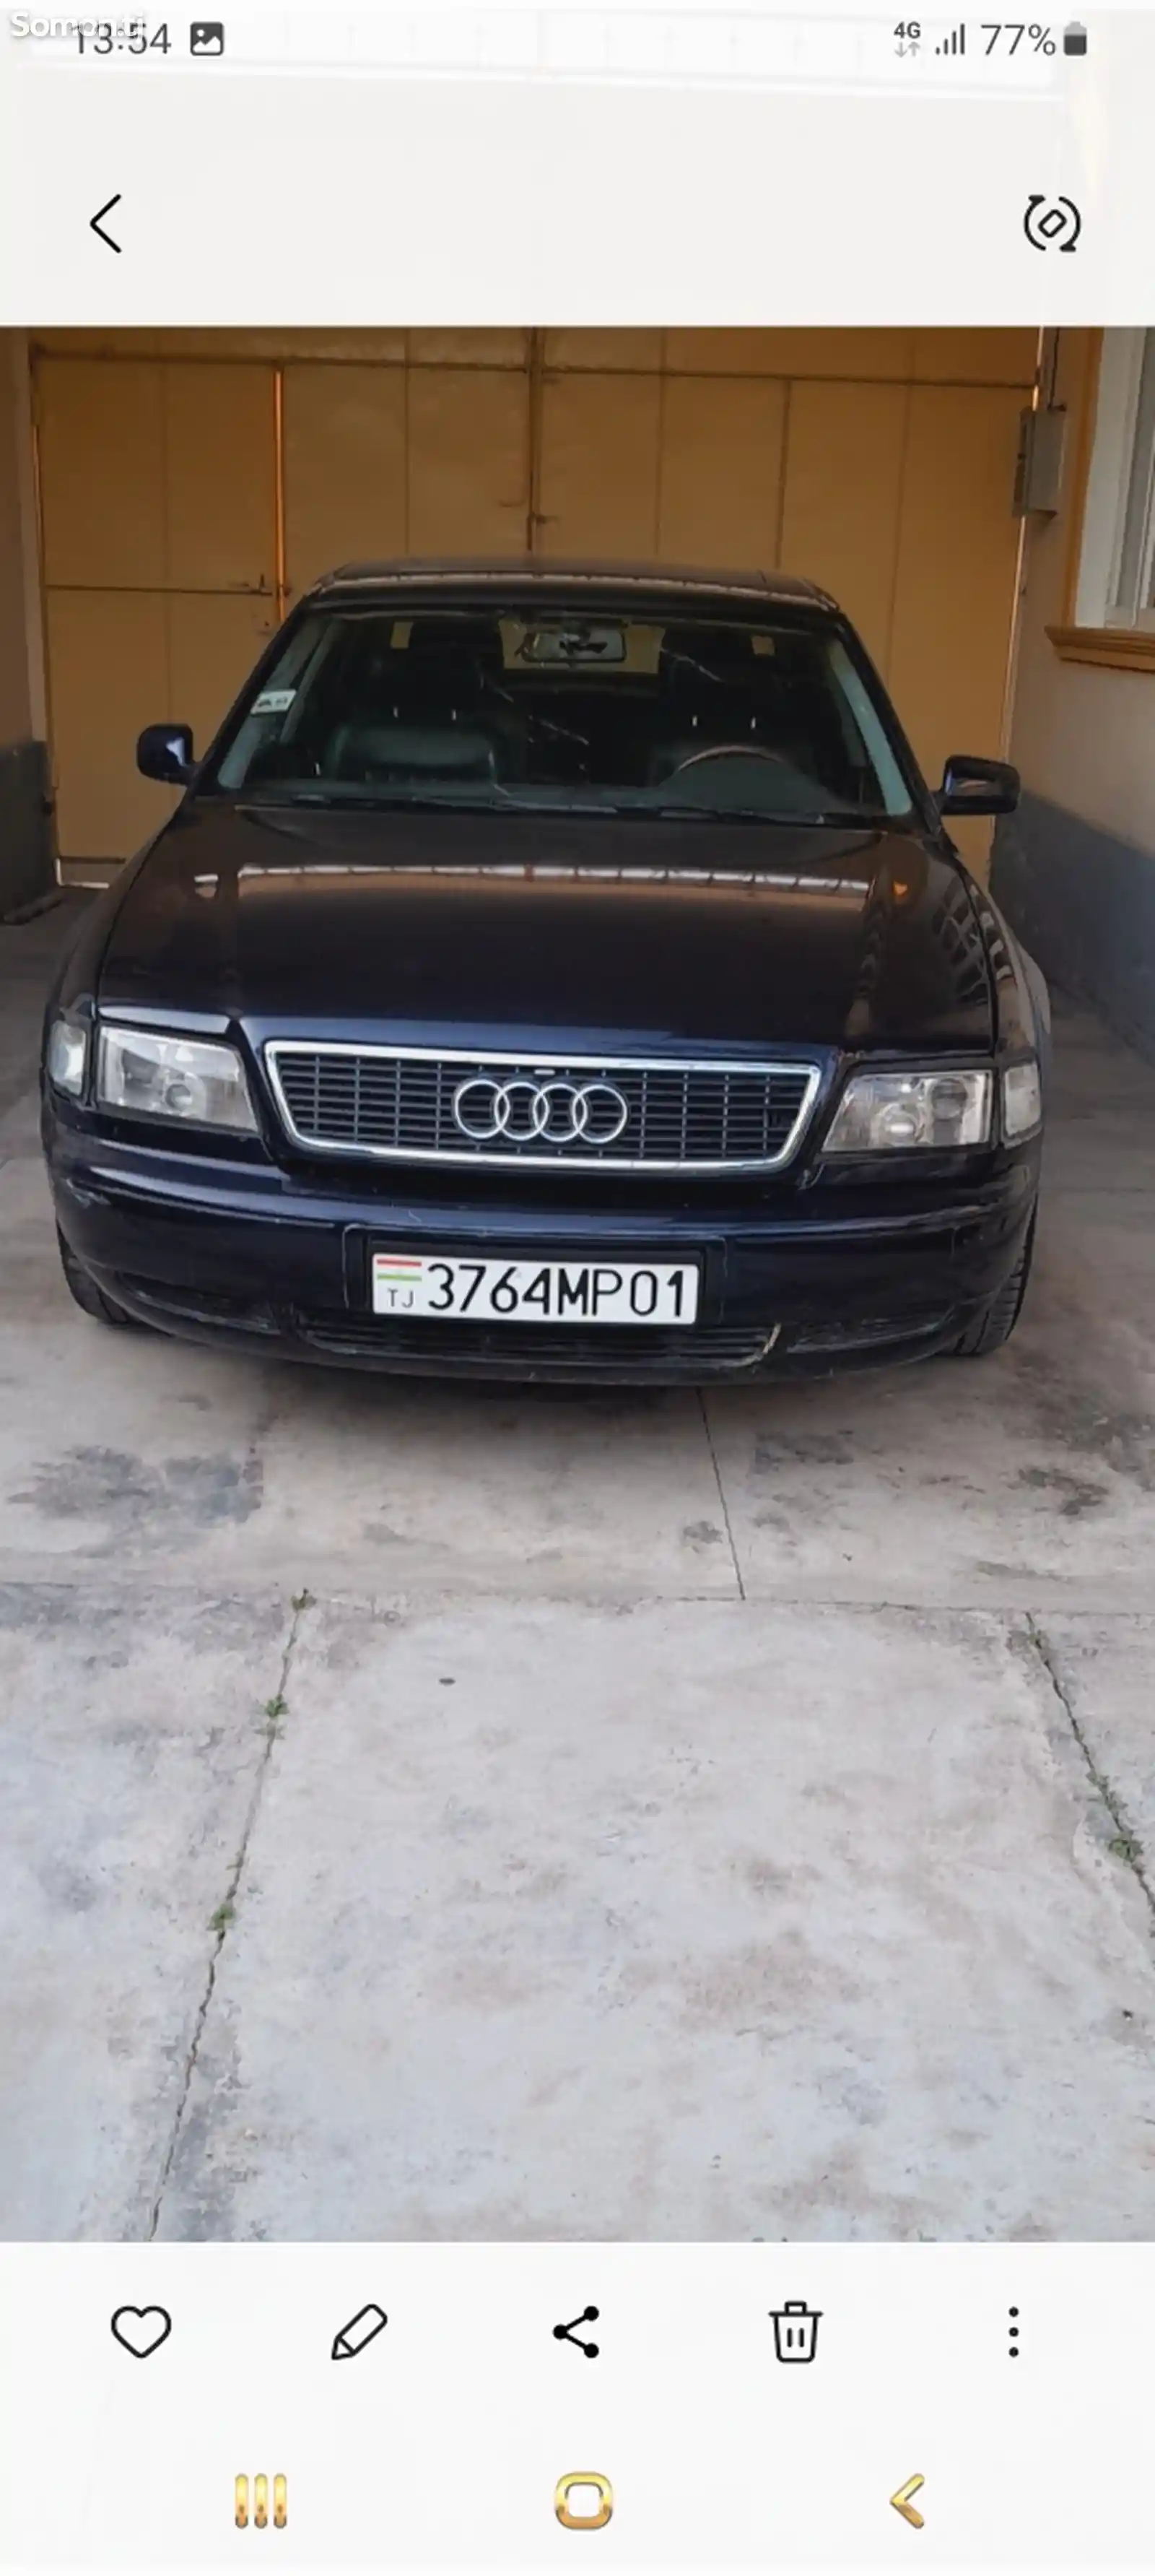 Audi A8, 1995-1